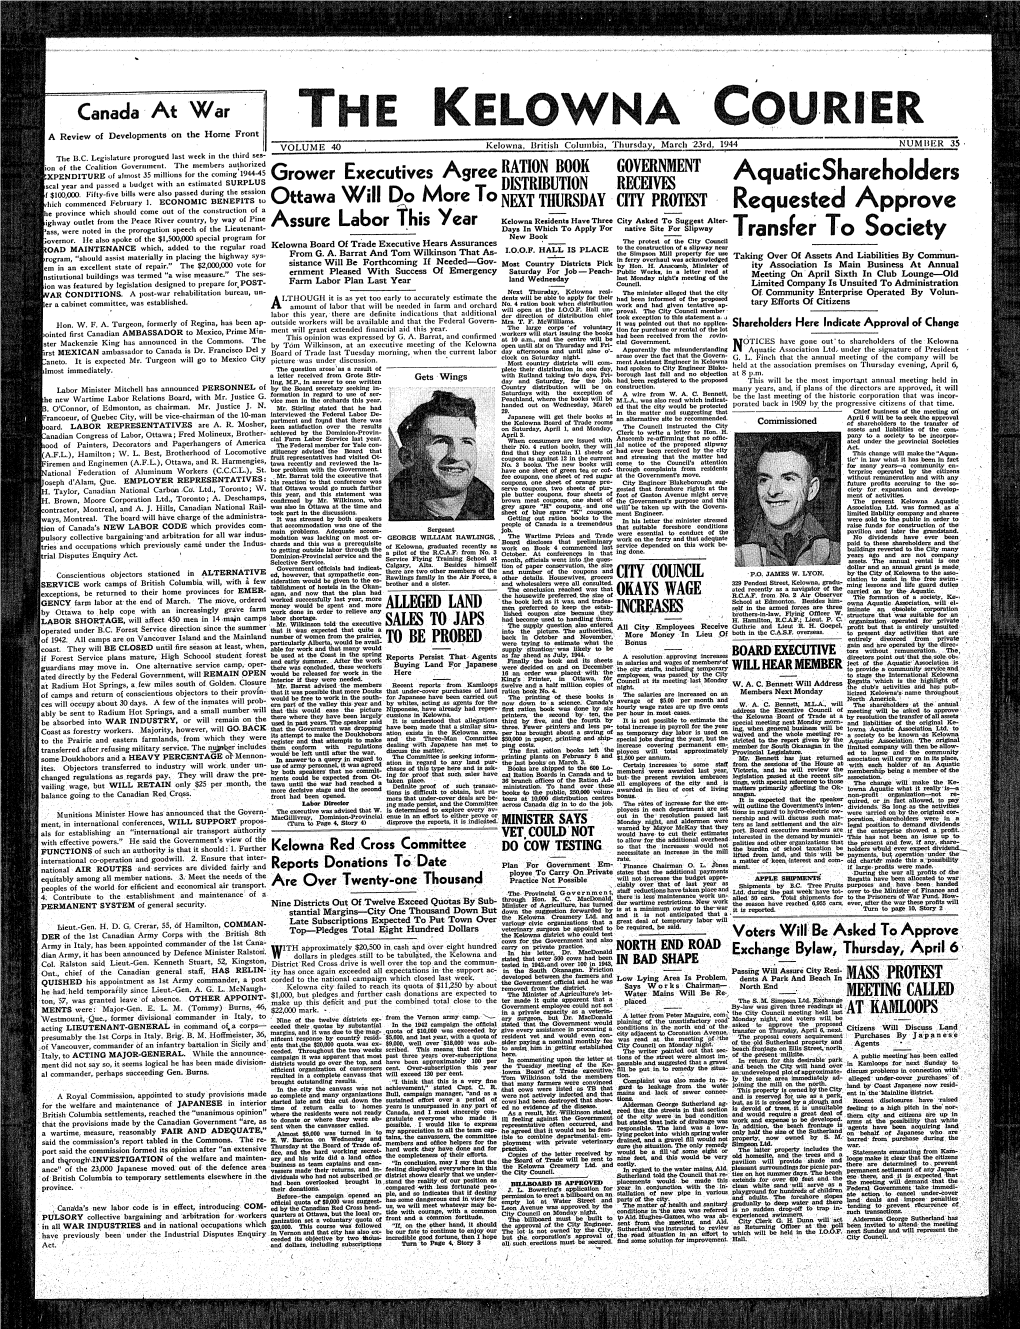 The Kelowna Courier a Review of Developments on the Home Front V O L U M E 40 Kelowna, British Columbia, Thursday, March 23Rd, 1944 N U M B E R 35 the Li.C